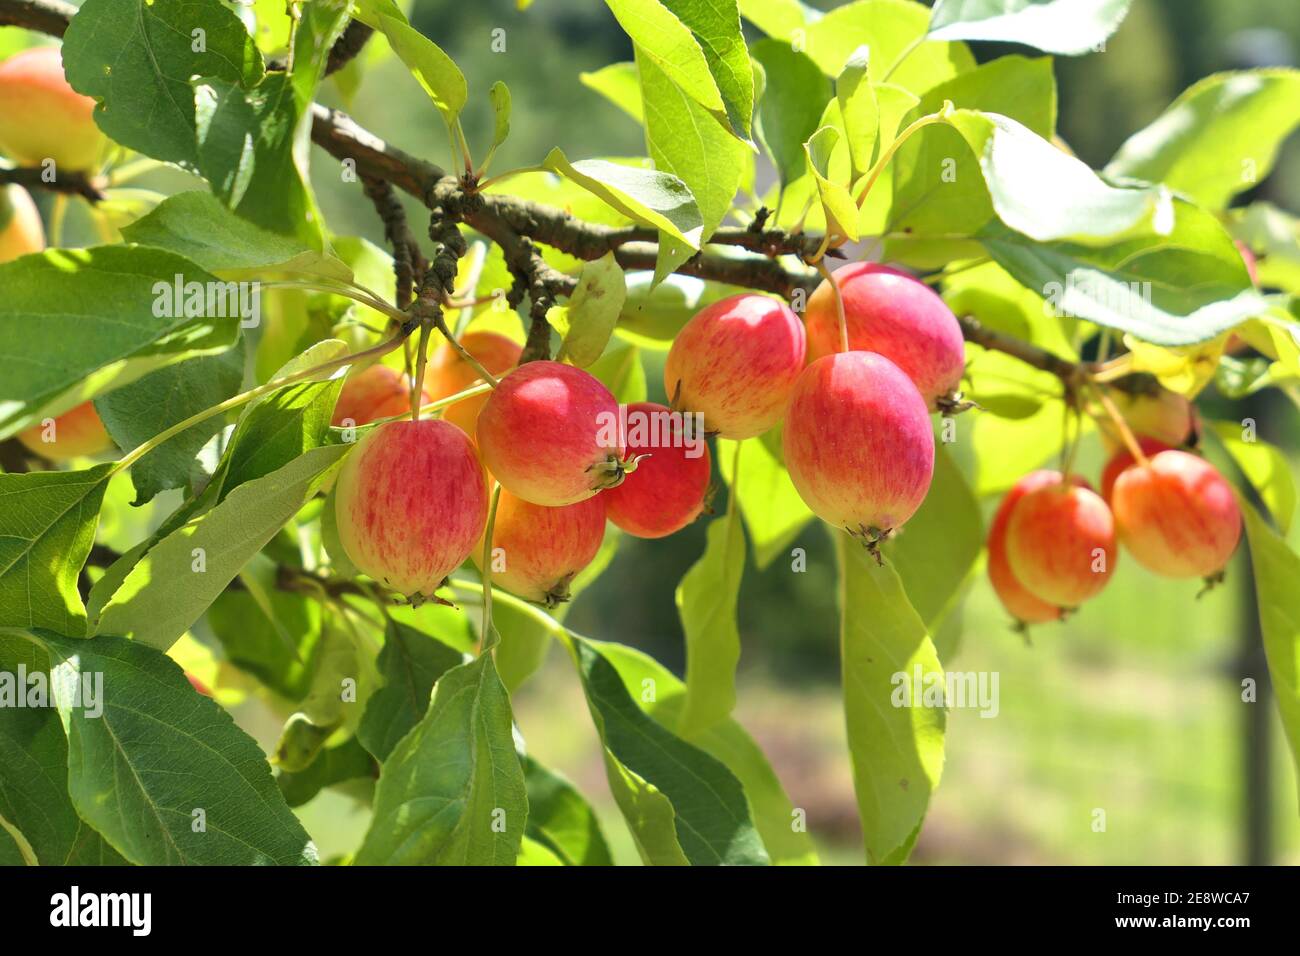 Crabapple tree full of apple fruits. Malus baccata , Dolgo variety. Stock Photo